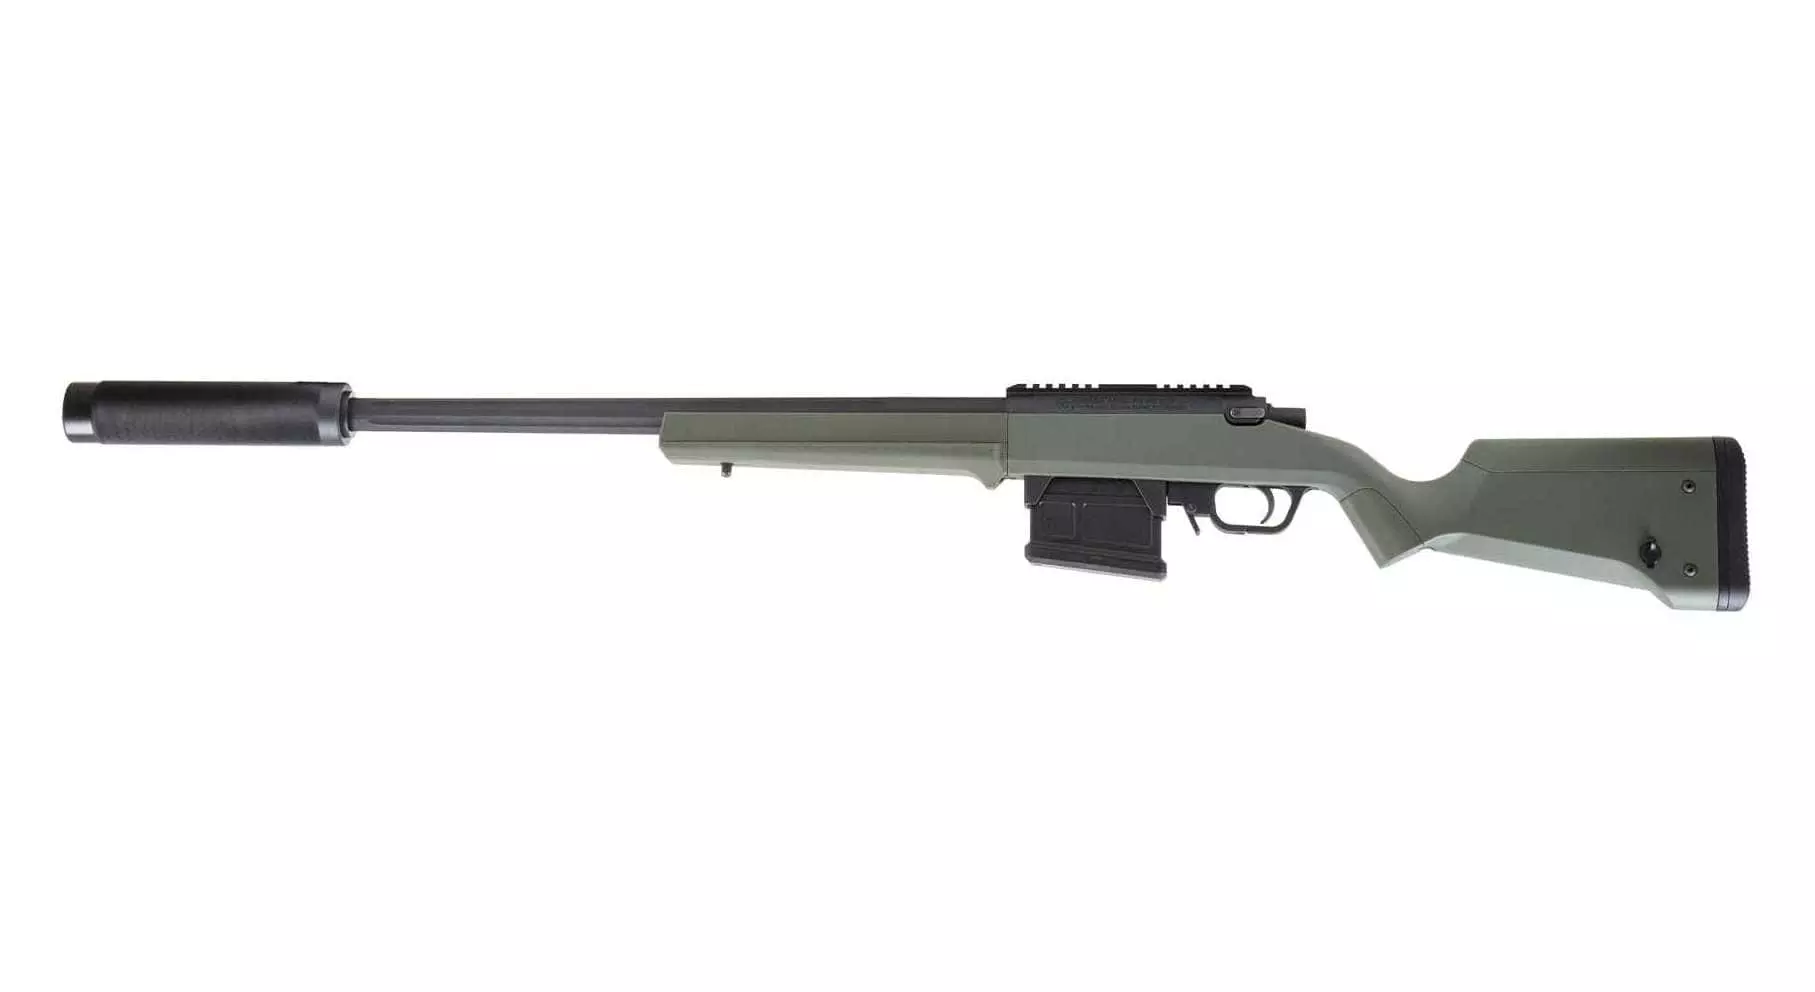 Remington 700 laser tag sniper gun